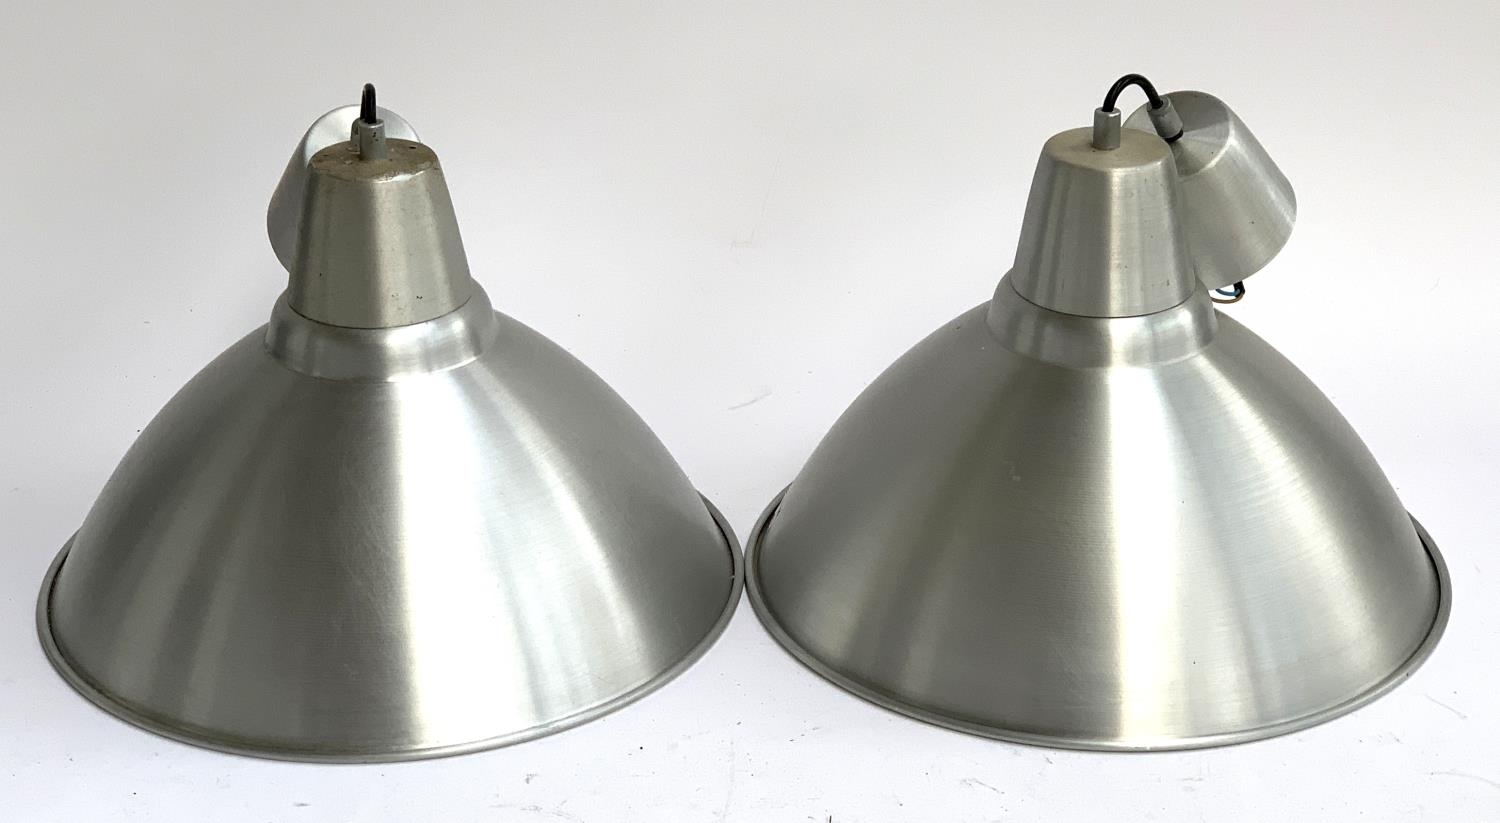 A pair of spun aluminium industrial style light shades, approx. 39cmD